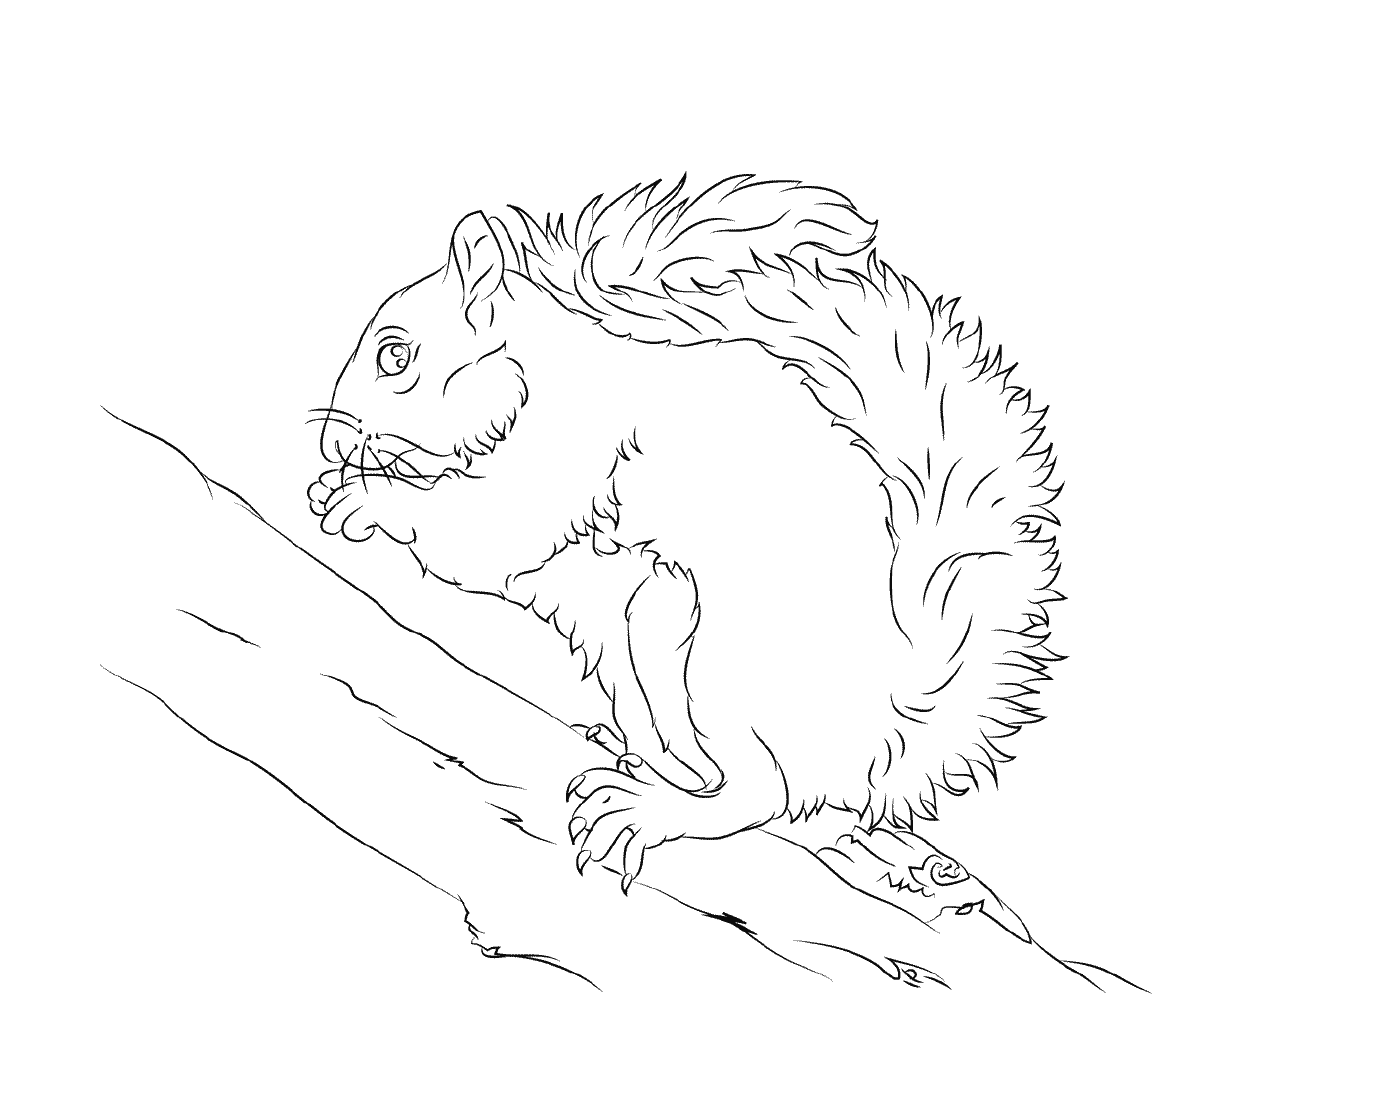  The grey squirrel eats a nut 